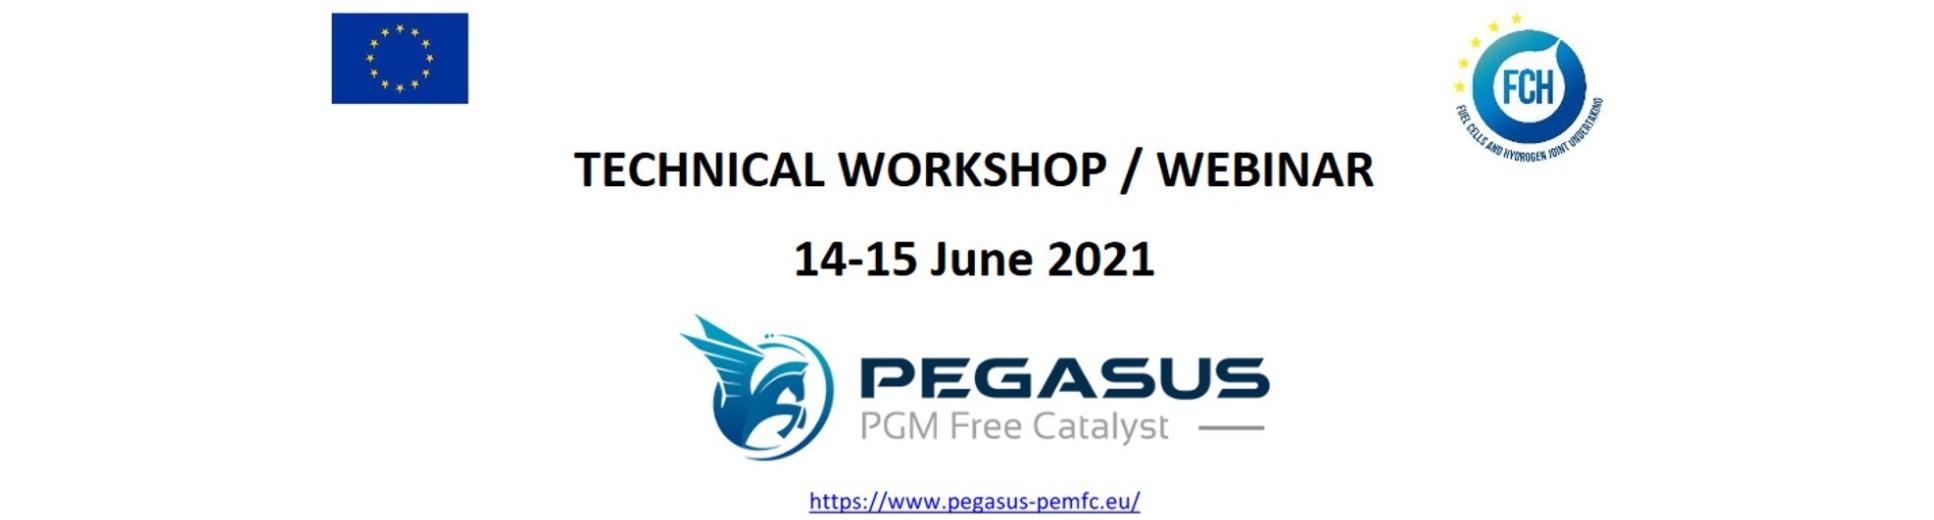 Pegasus workshop flyer